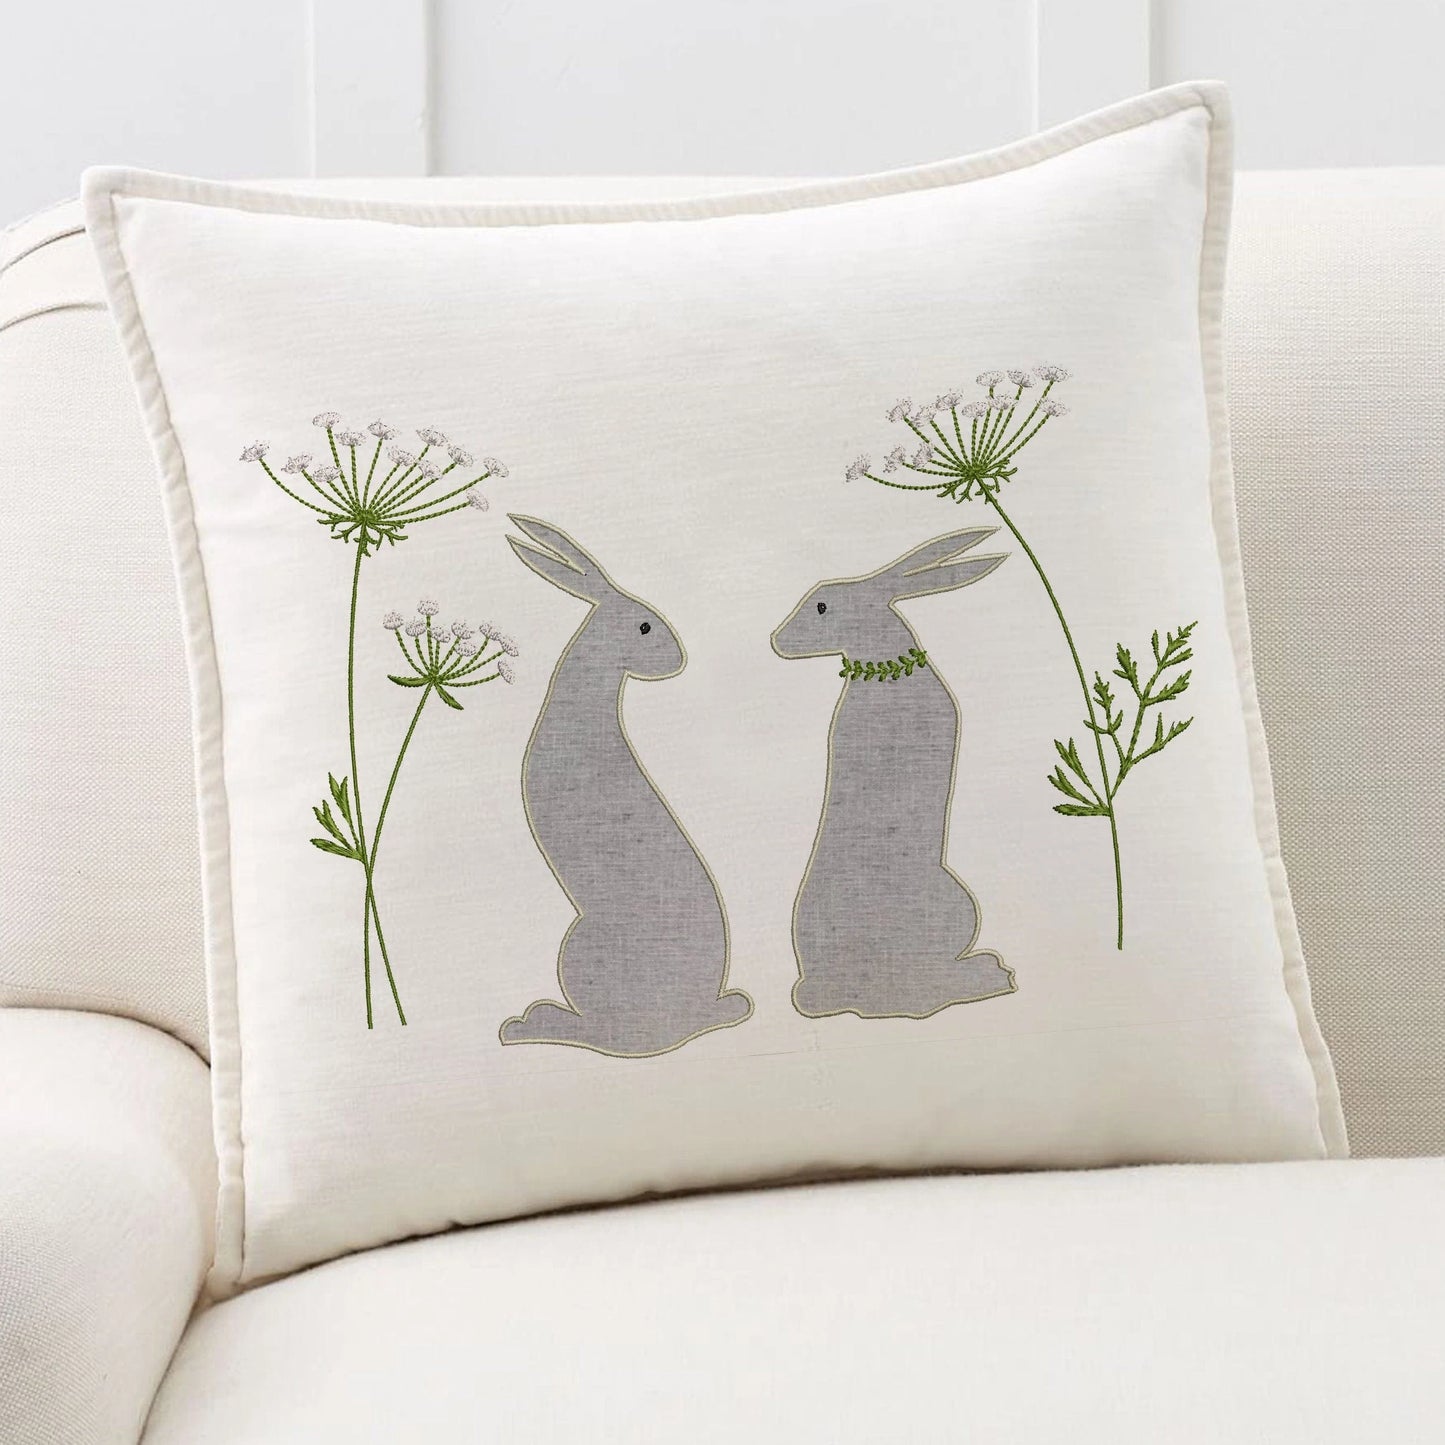 Rabbit Applique Machine Embroidery Design on pillow